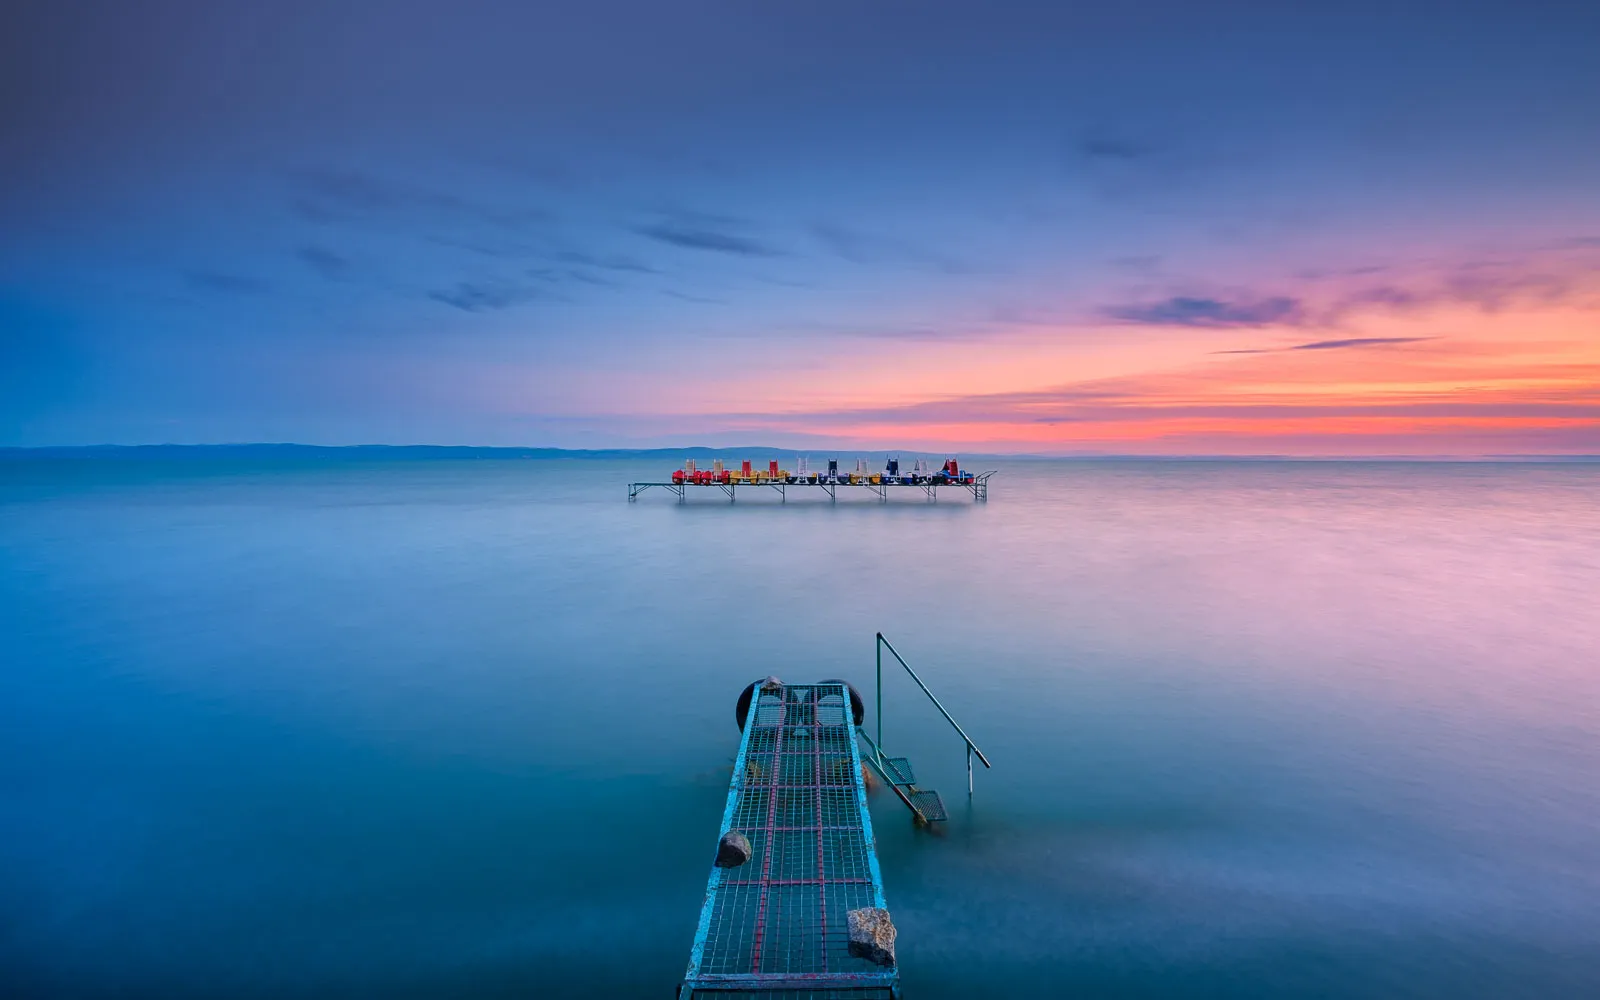 A long exposure photo taken just before sunrise of this iconic scene from Lake Balaton.